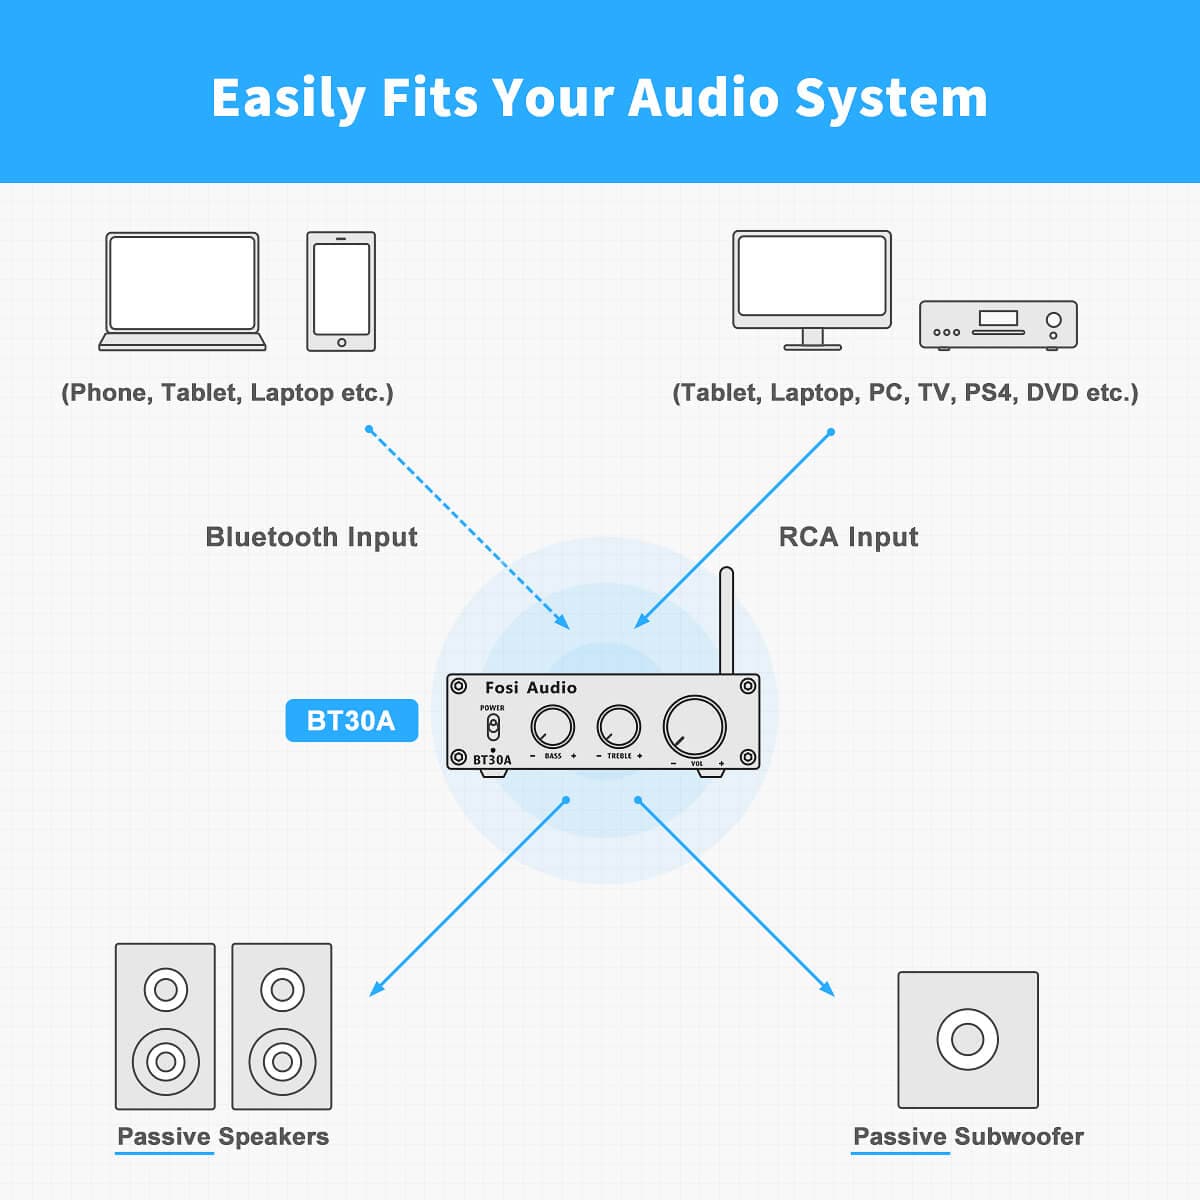 fosi audio system